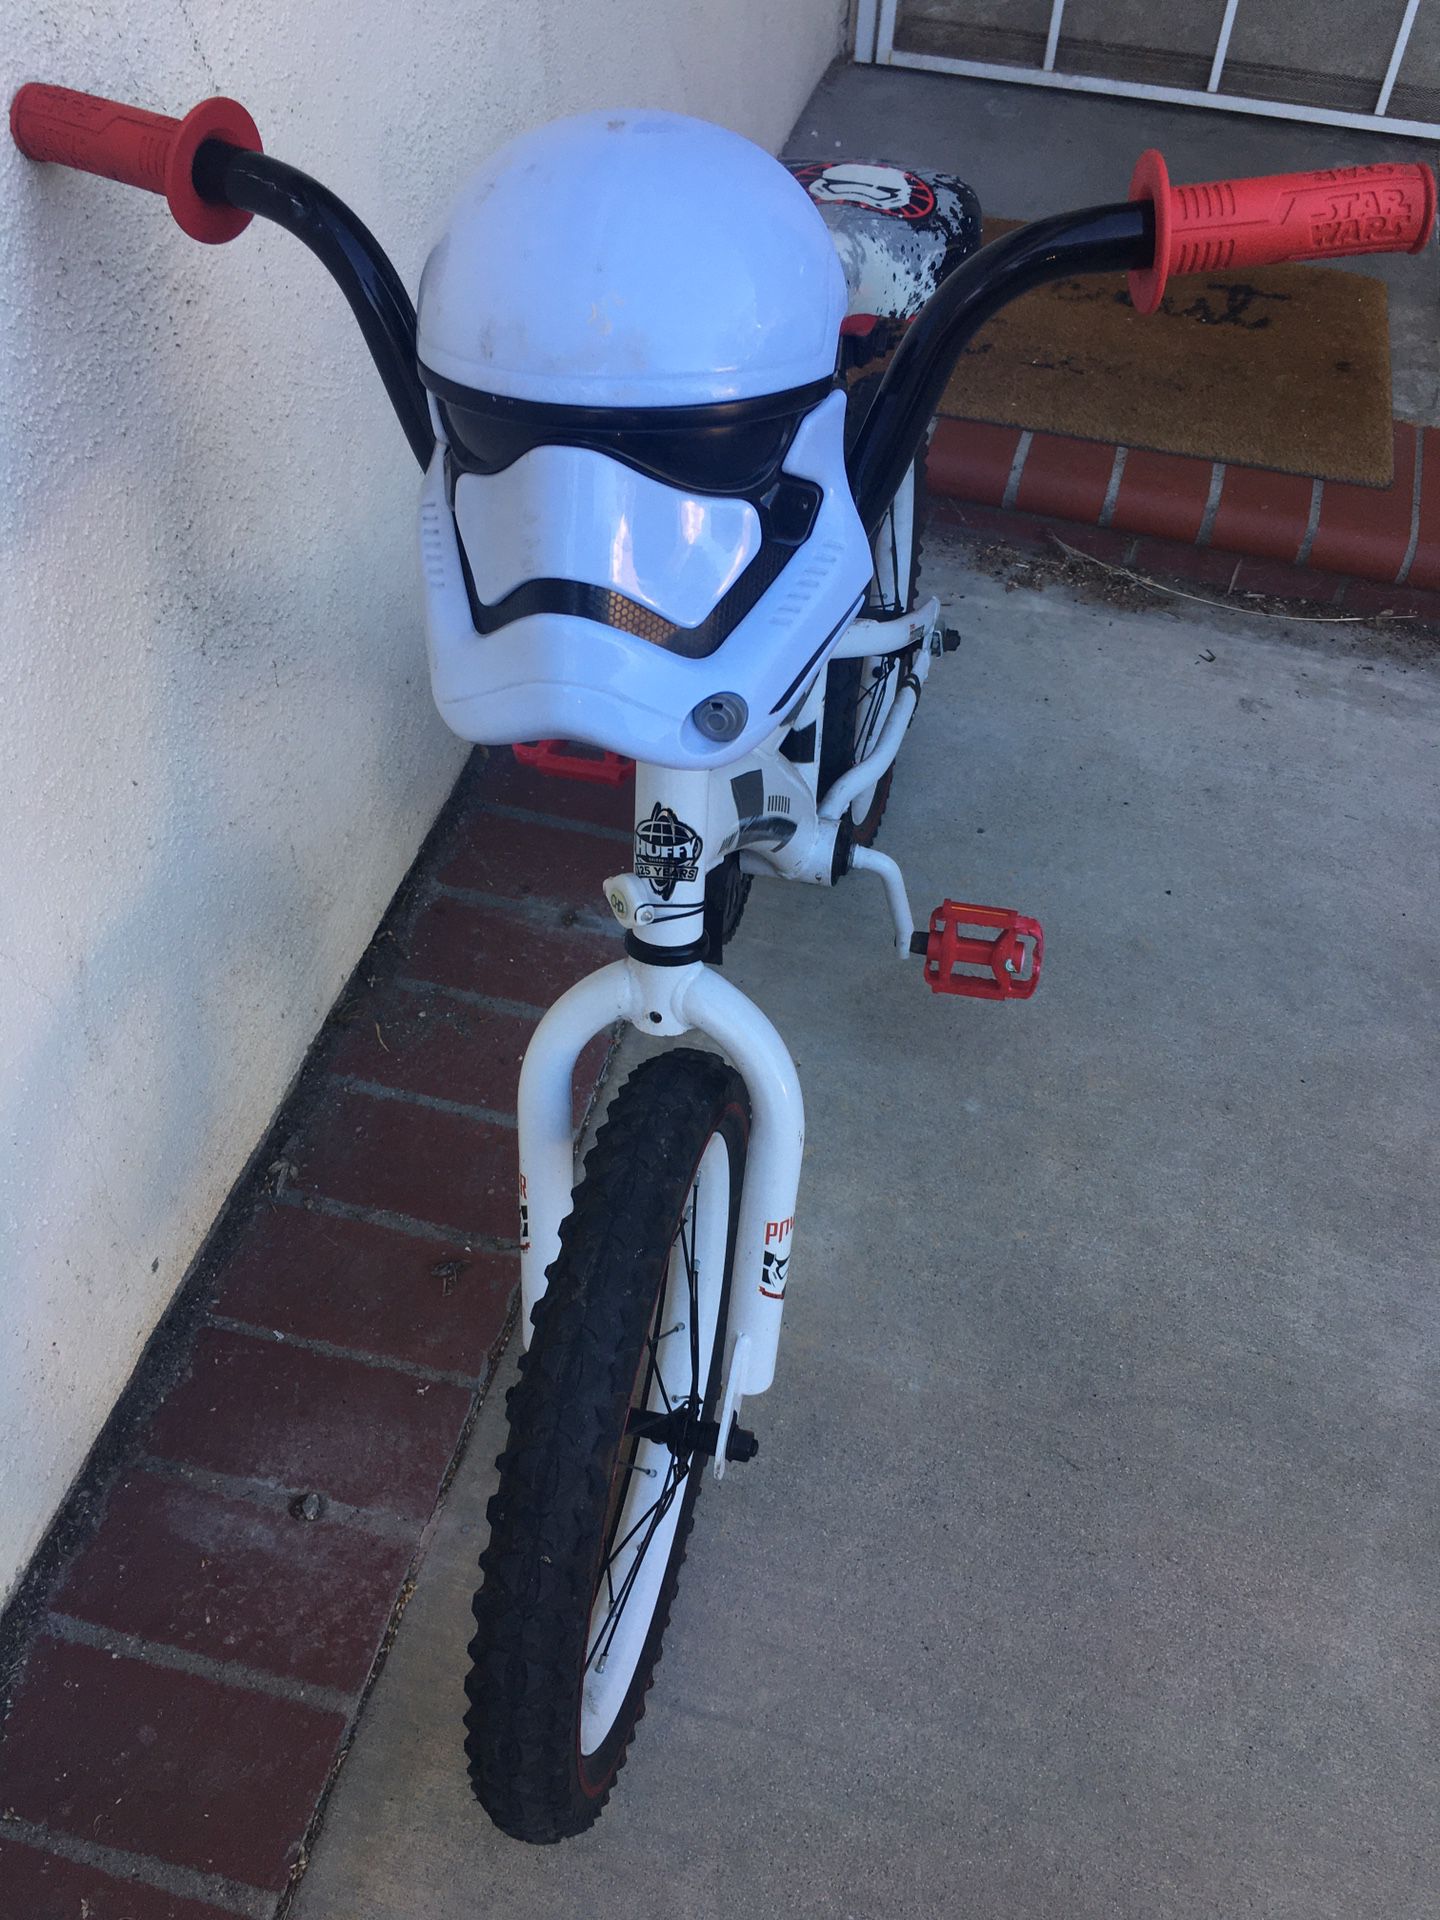 Star Wars huffy kids bike